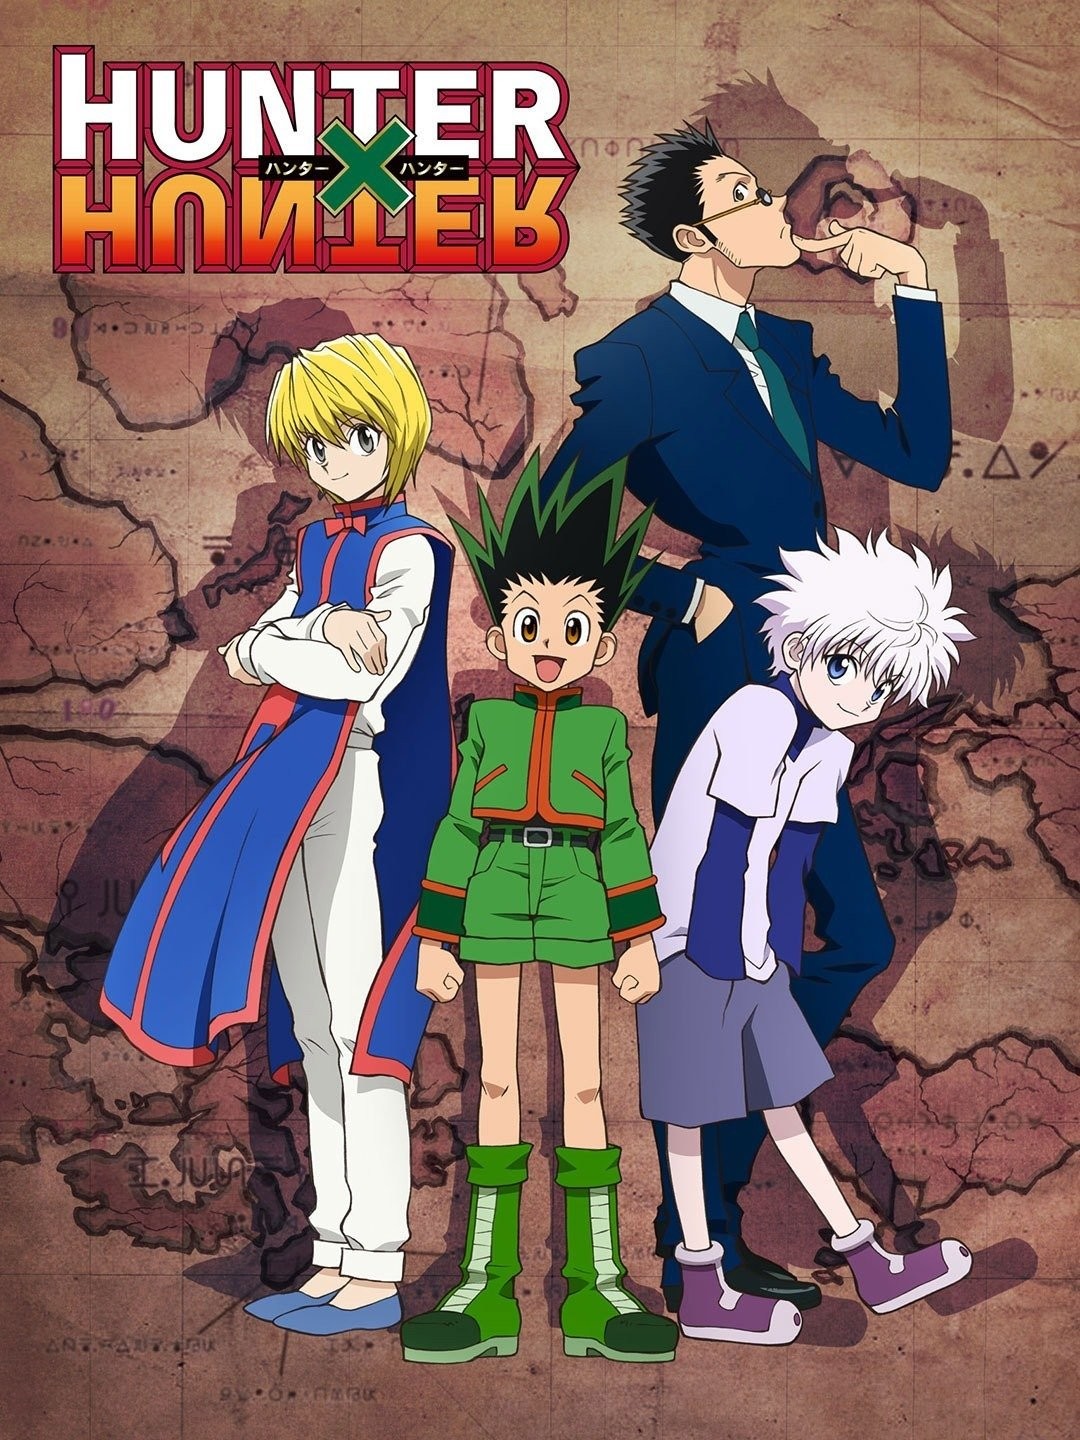 Review: Hunter X Hunter Part 3 (Eps 59-88) (Blu-Ray) - Anime Inferno